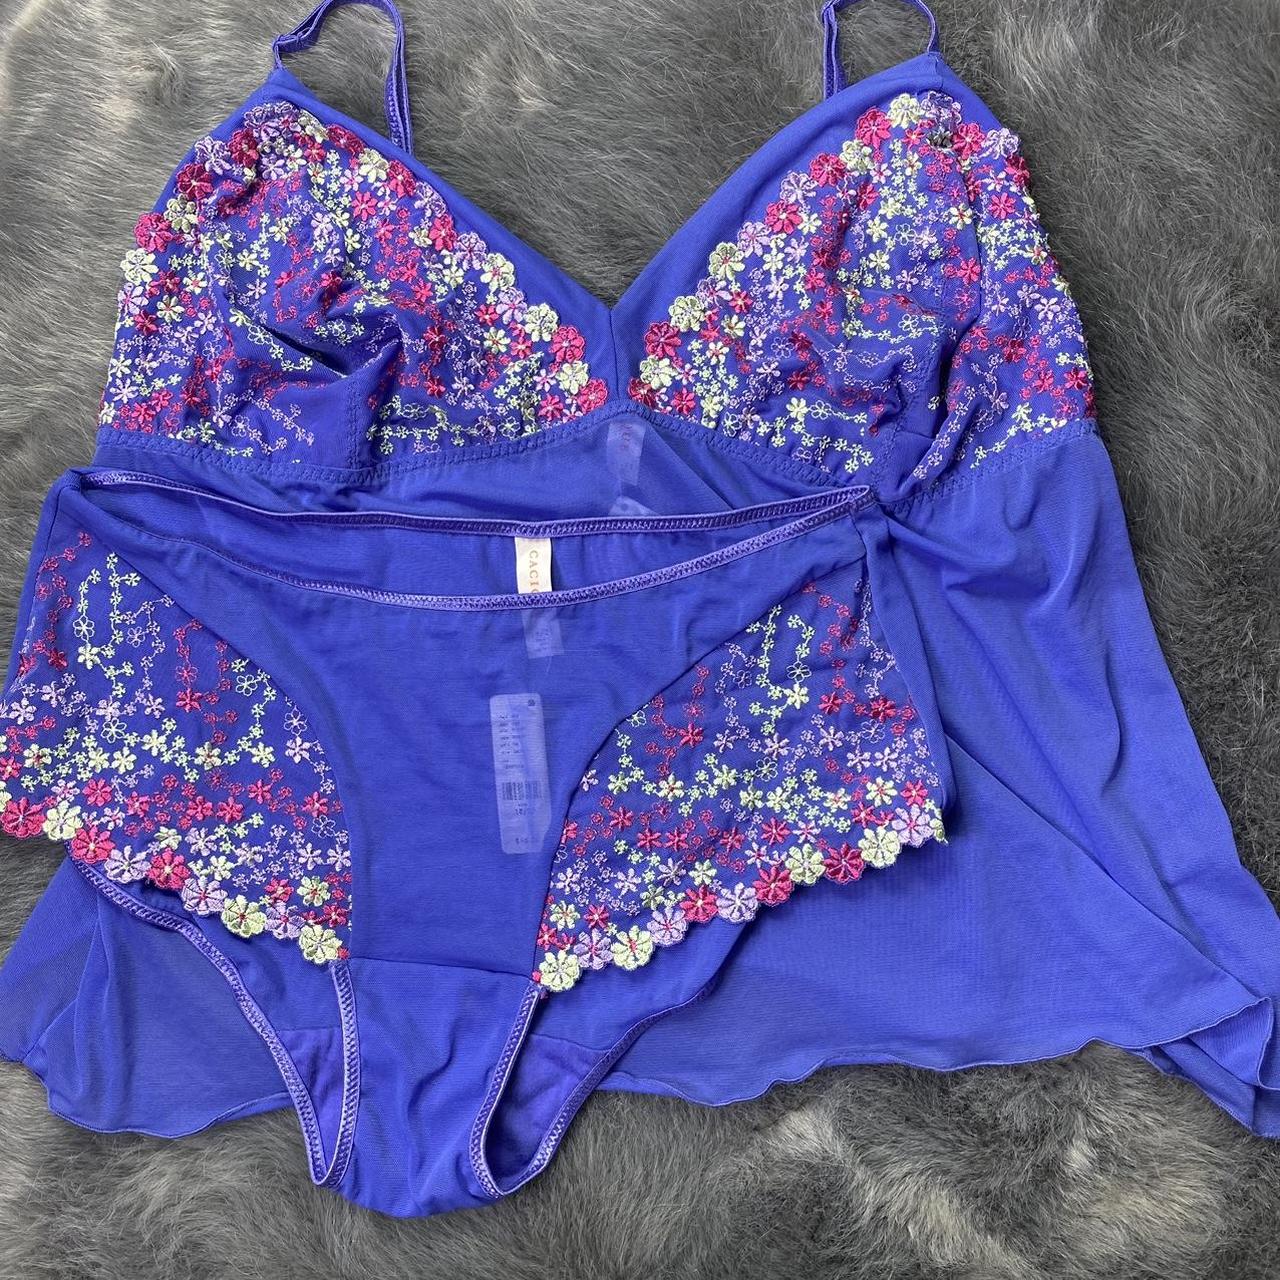 Cacique Purple Bikinis